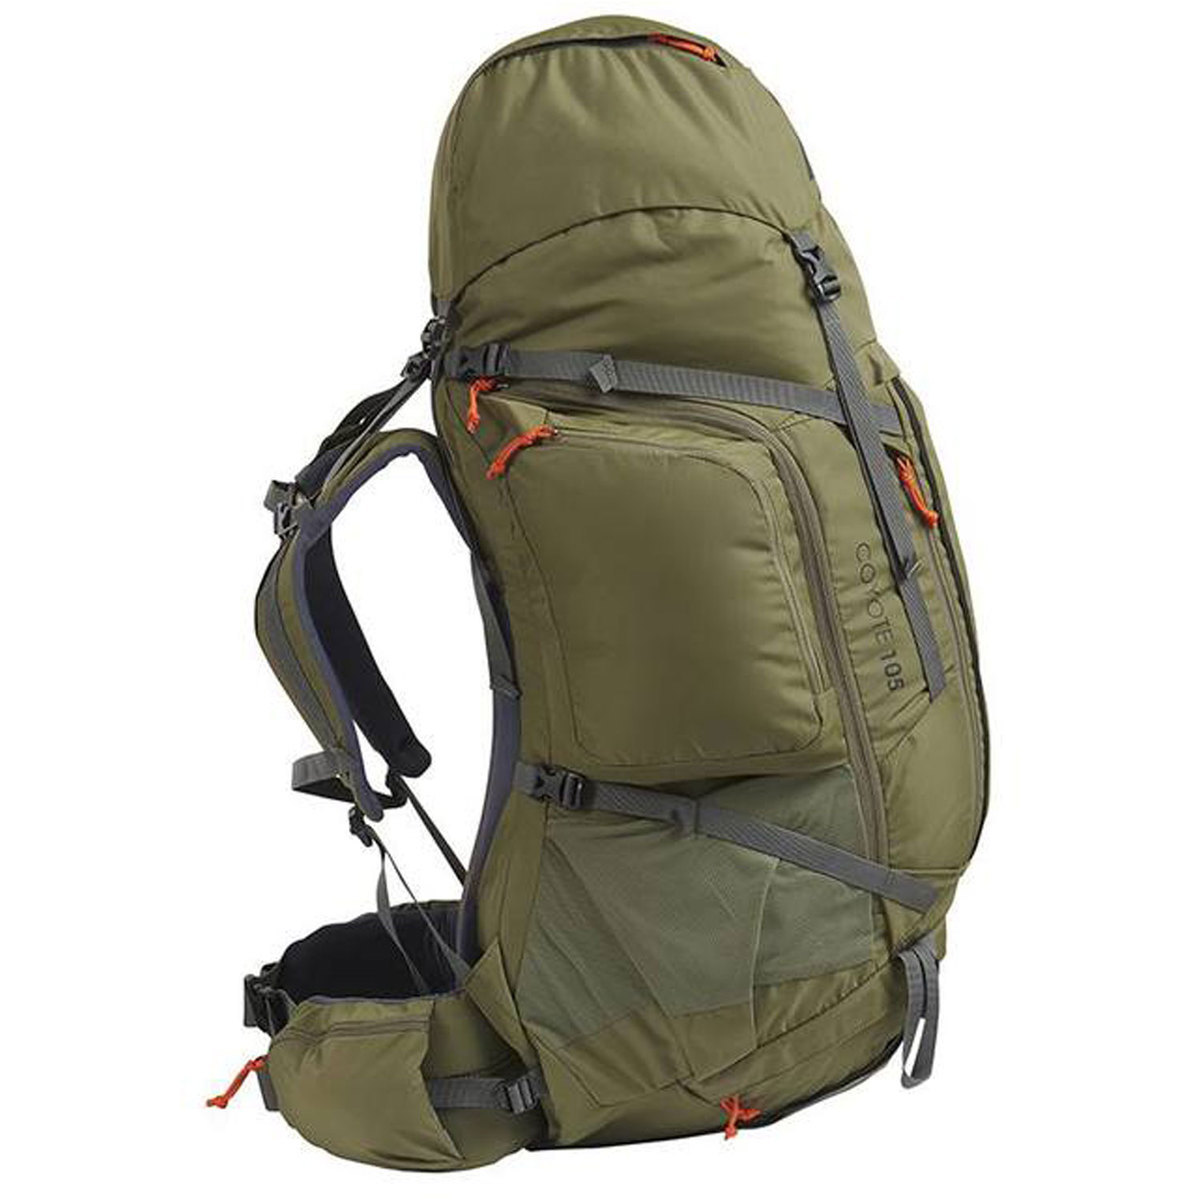 Kelty Coyote 105 Liter Backpacking Pack - Burnt Olive | Sportsman's ...